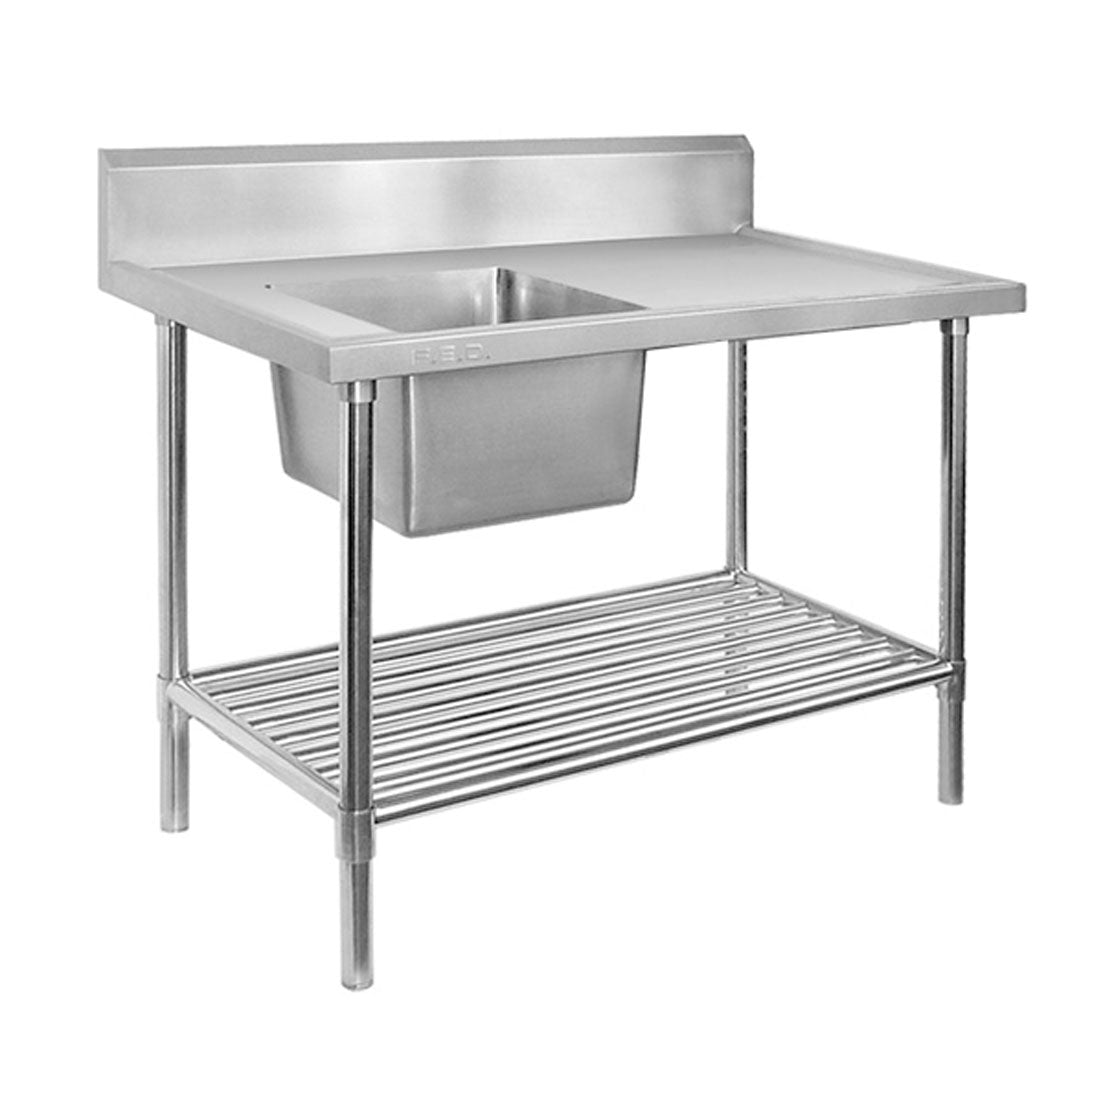 Modular Systems Single Left Sink Bench with Pot Undershelf 2400x600x900 SSB6-2400L/A